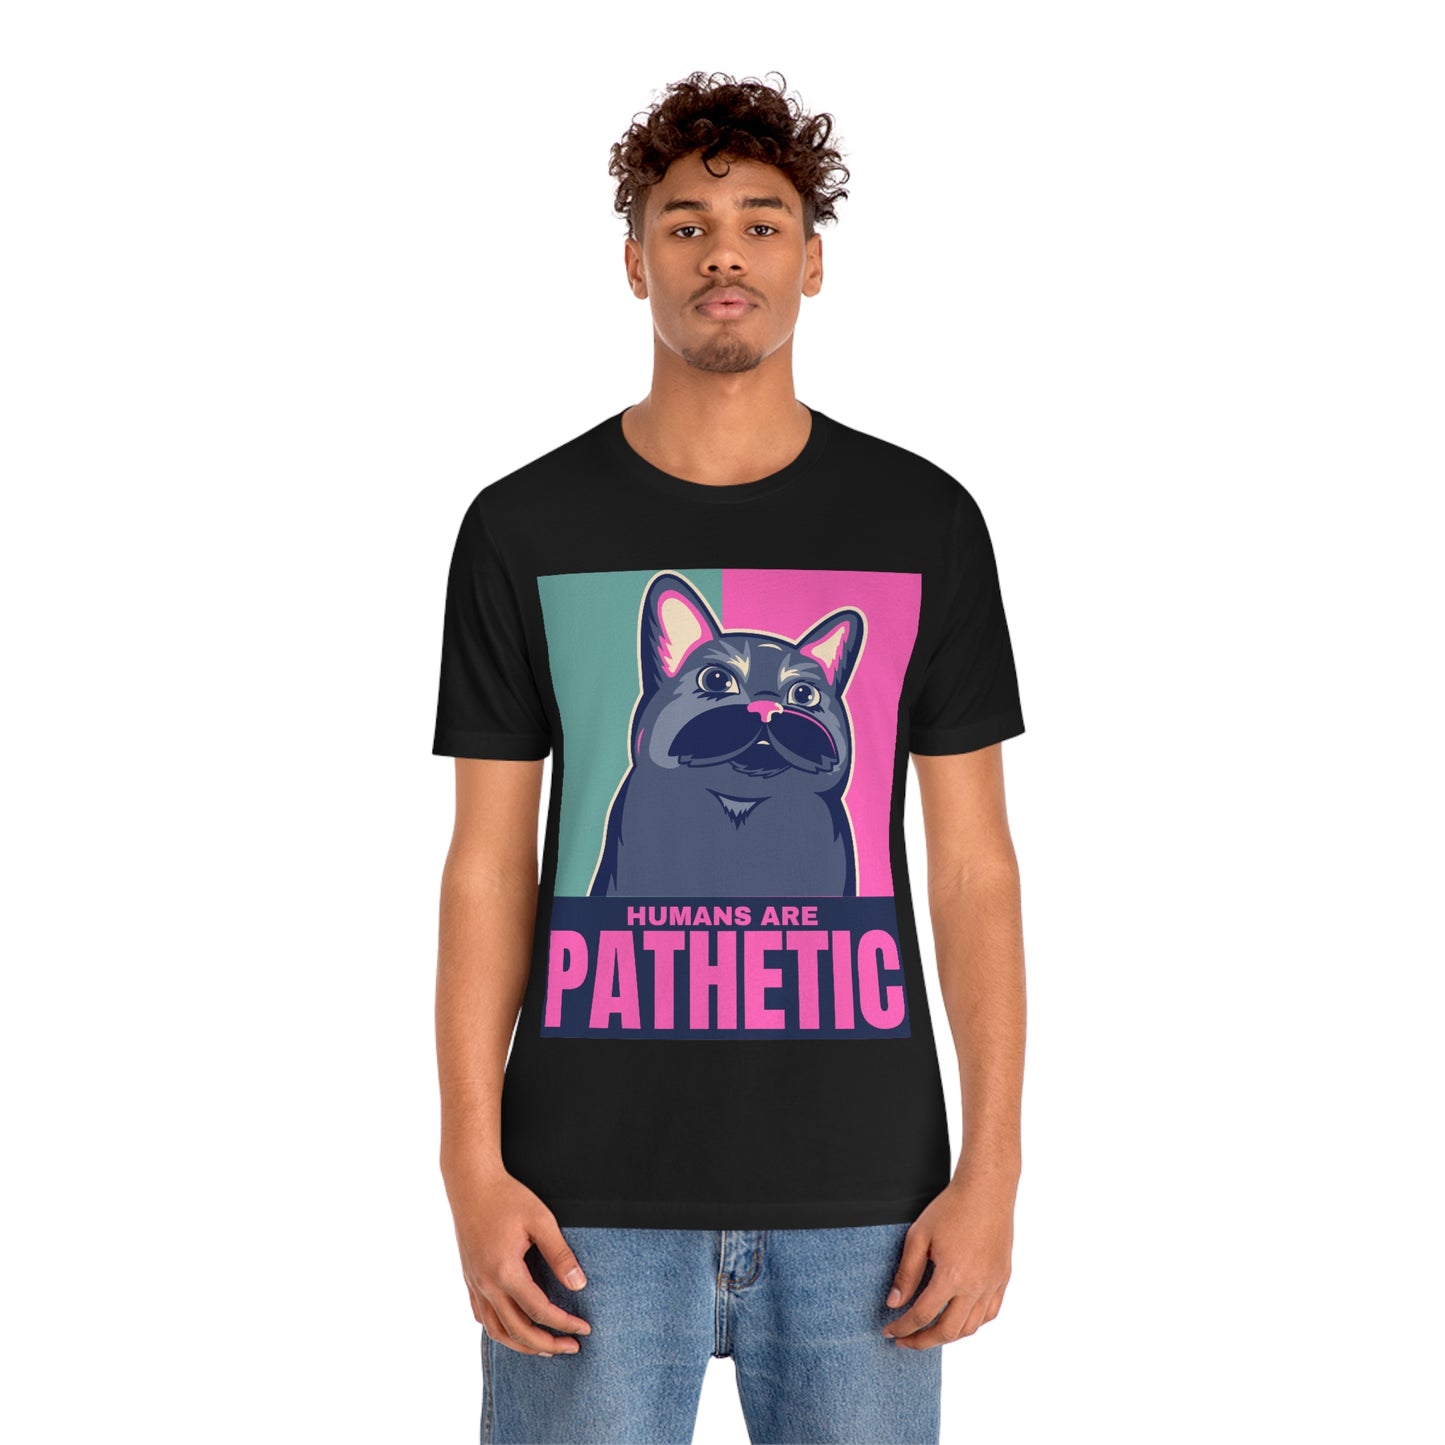 Humans are pathetic - Unisex T-Shirt